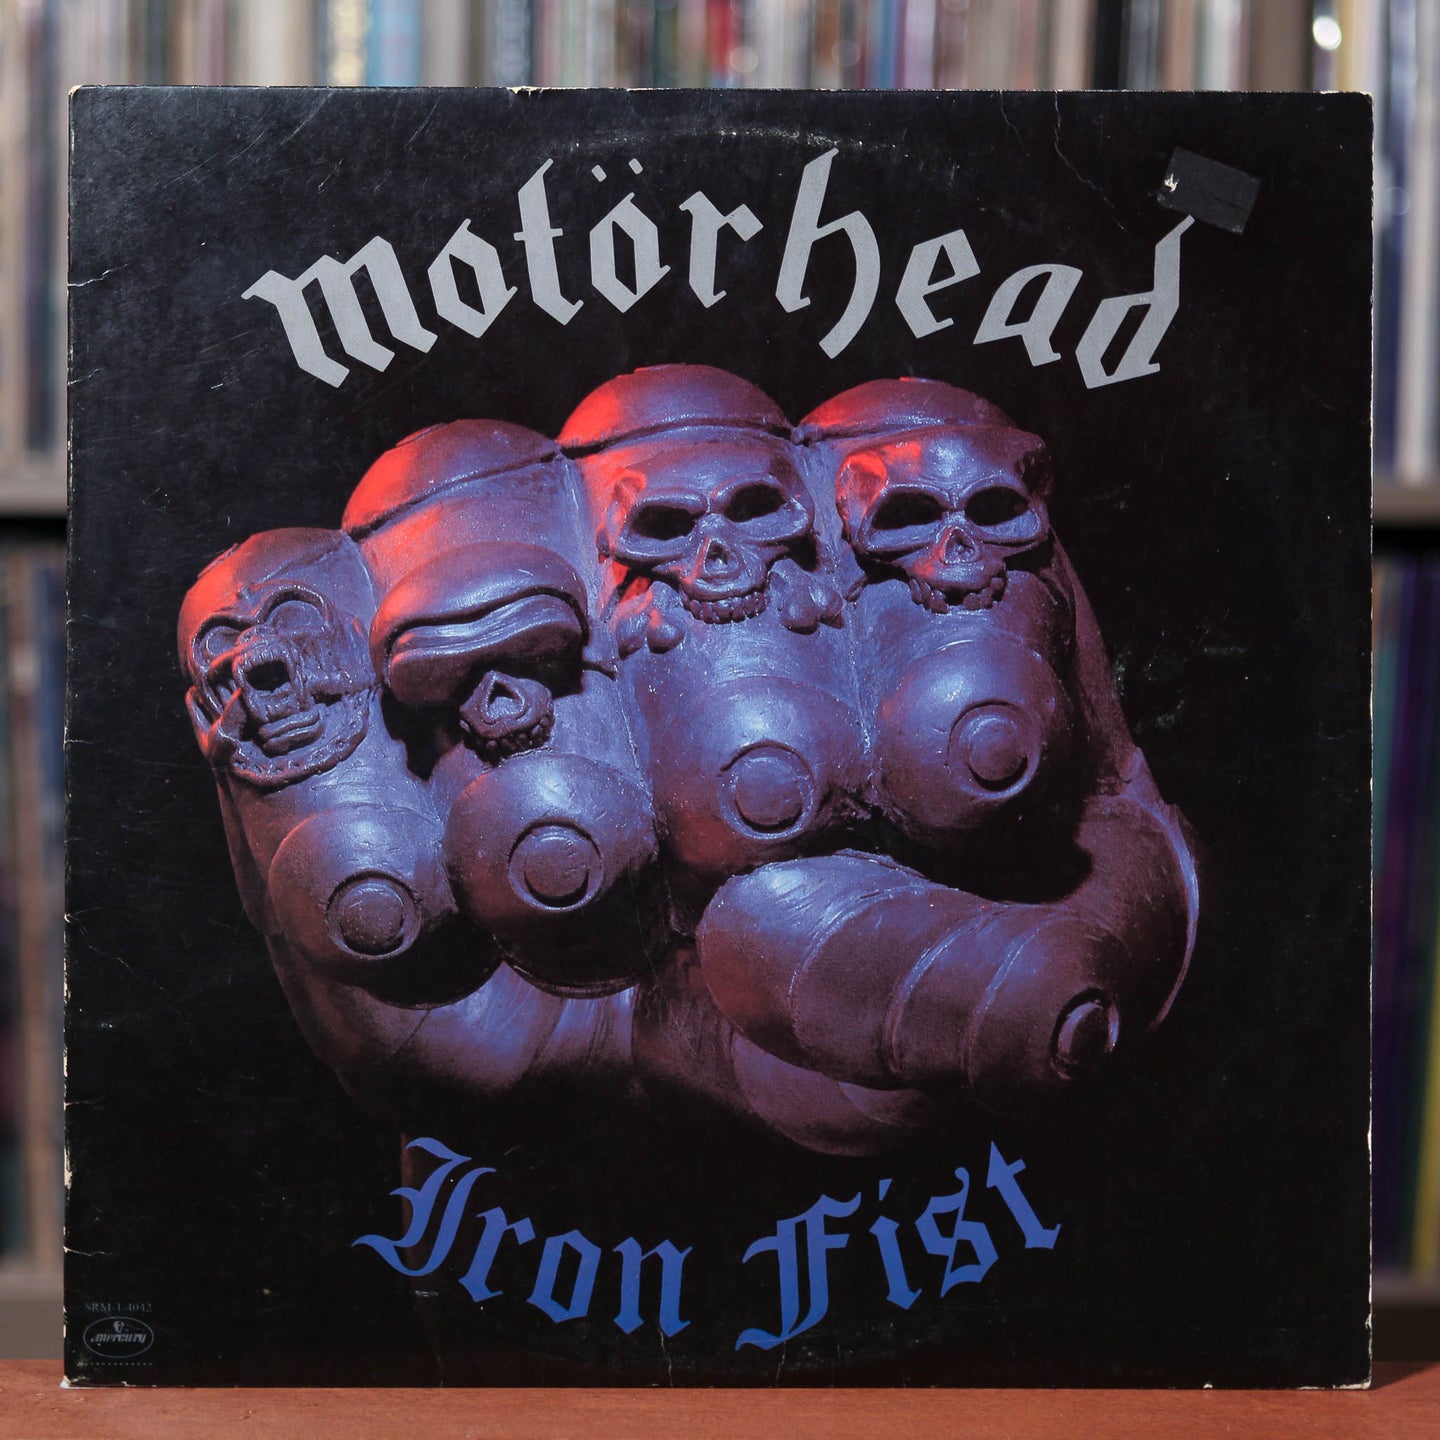 Motorhead - Iron Fist - Rare PROMO - 1982 Mercury, VG/VG